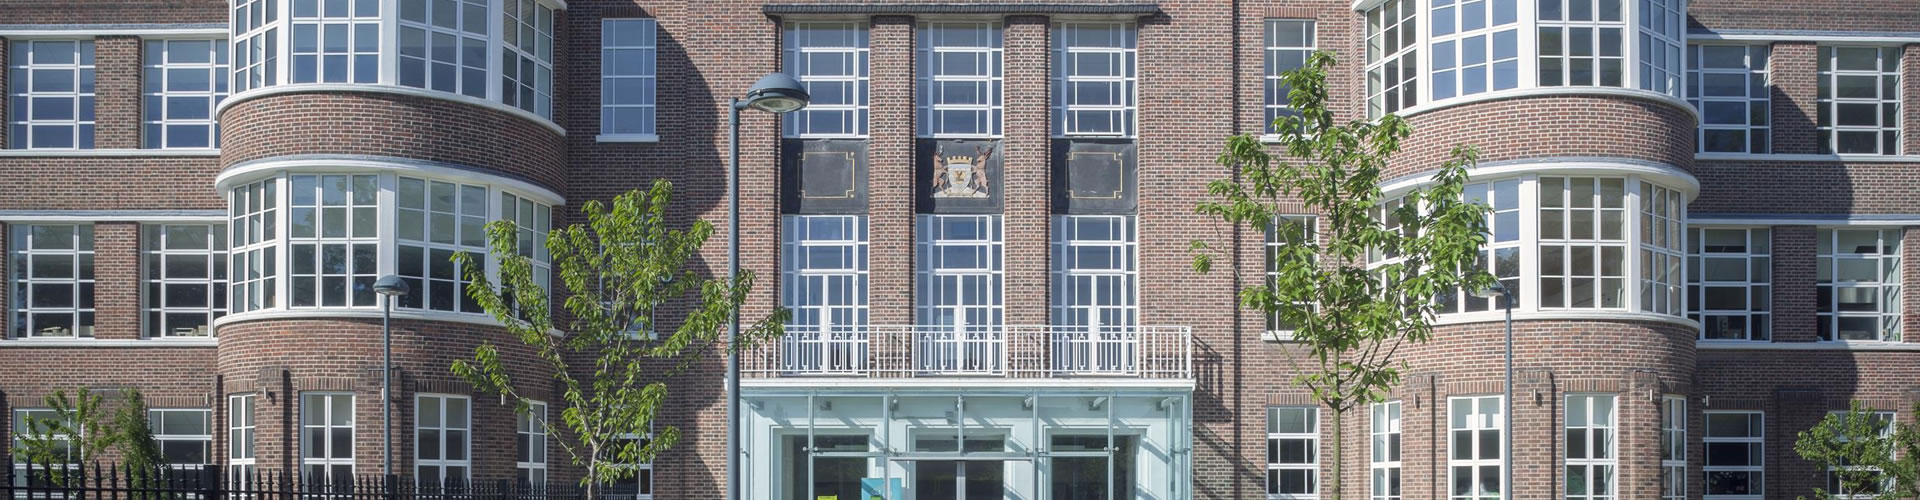 alitherm heritage aluminium windows romford london